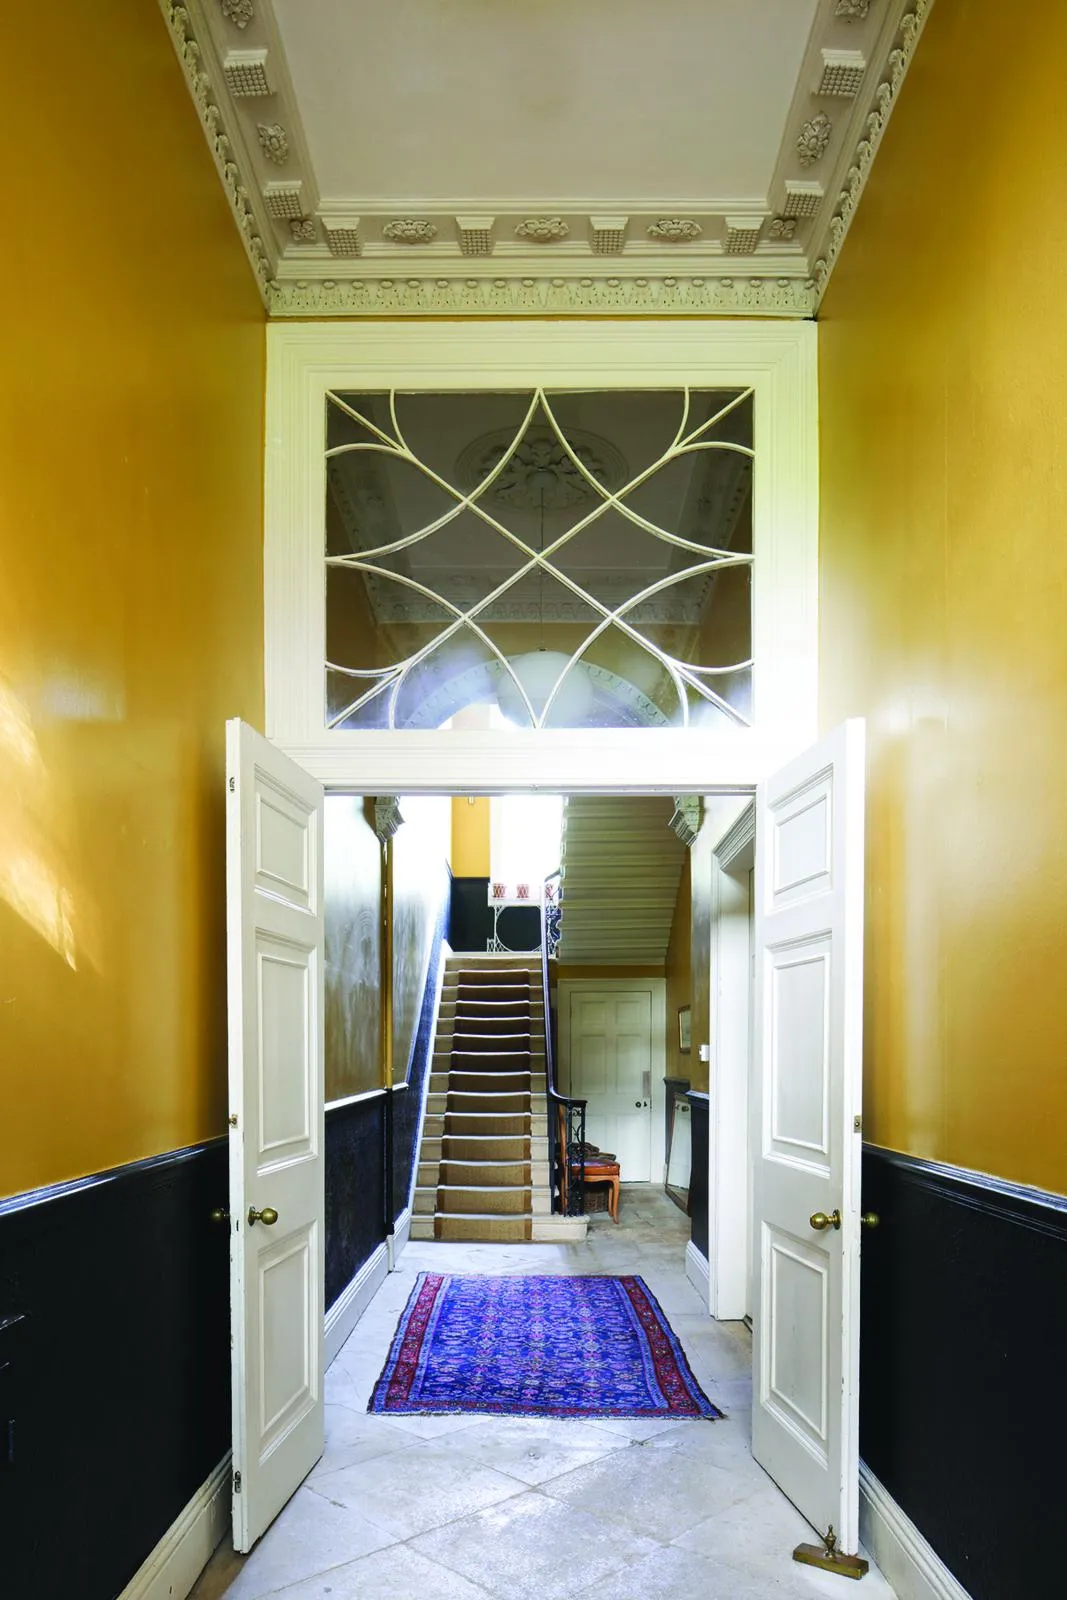 Regency Bath apartment, entrance hall.